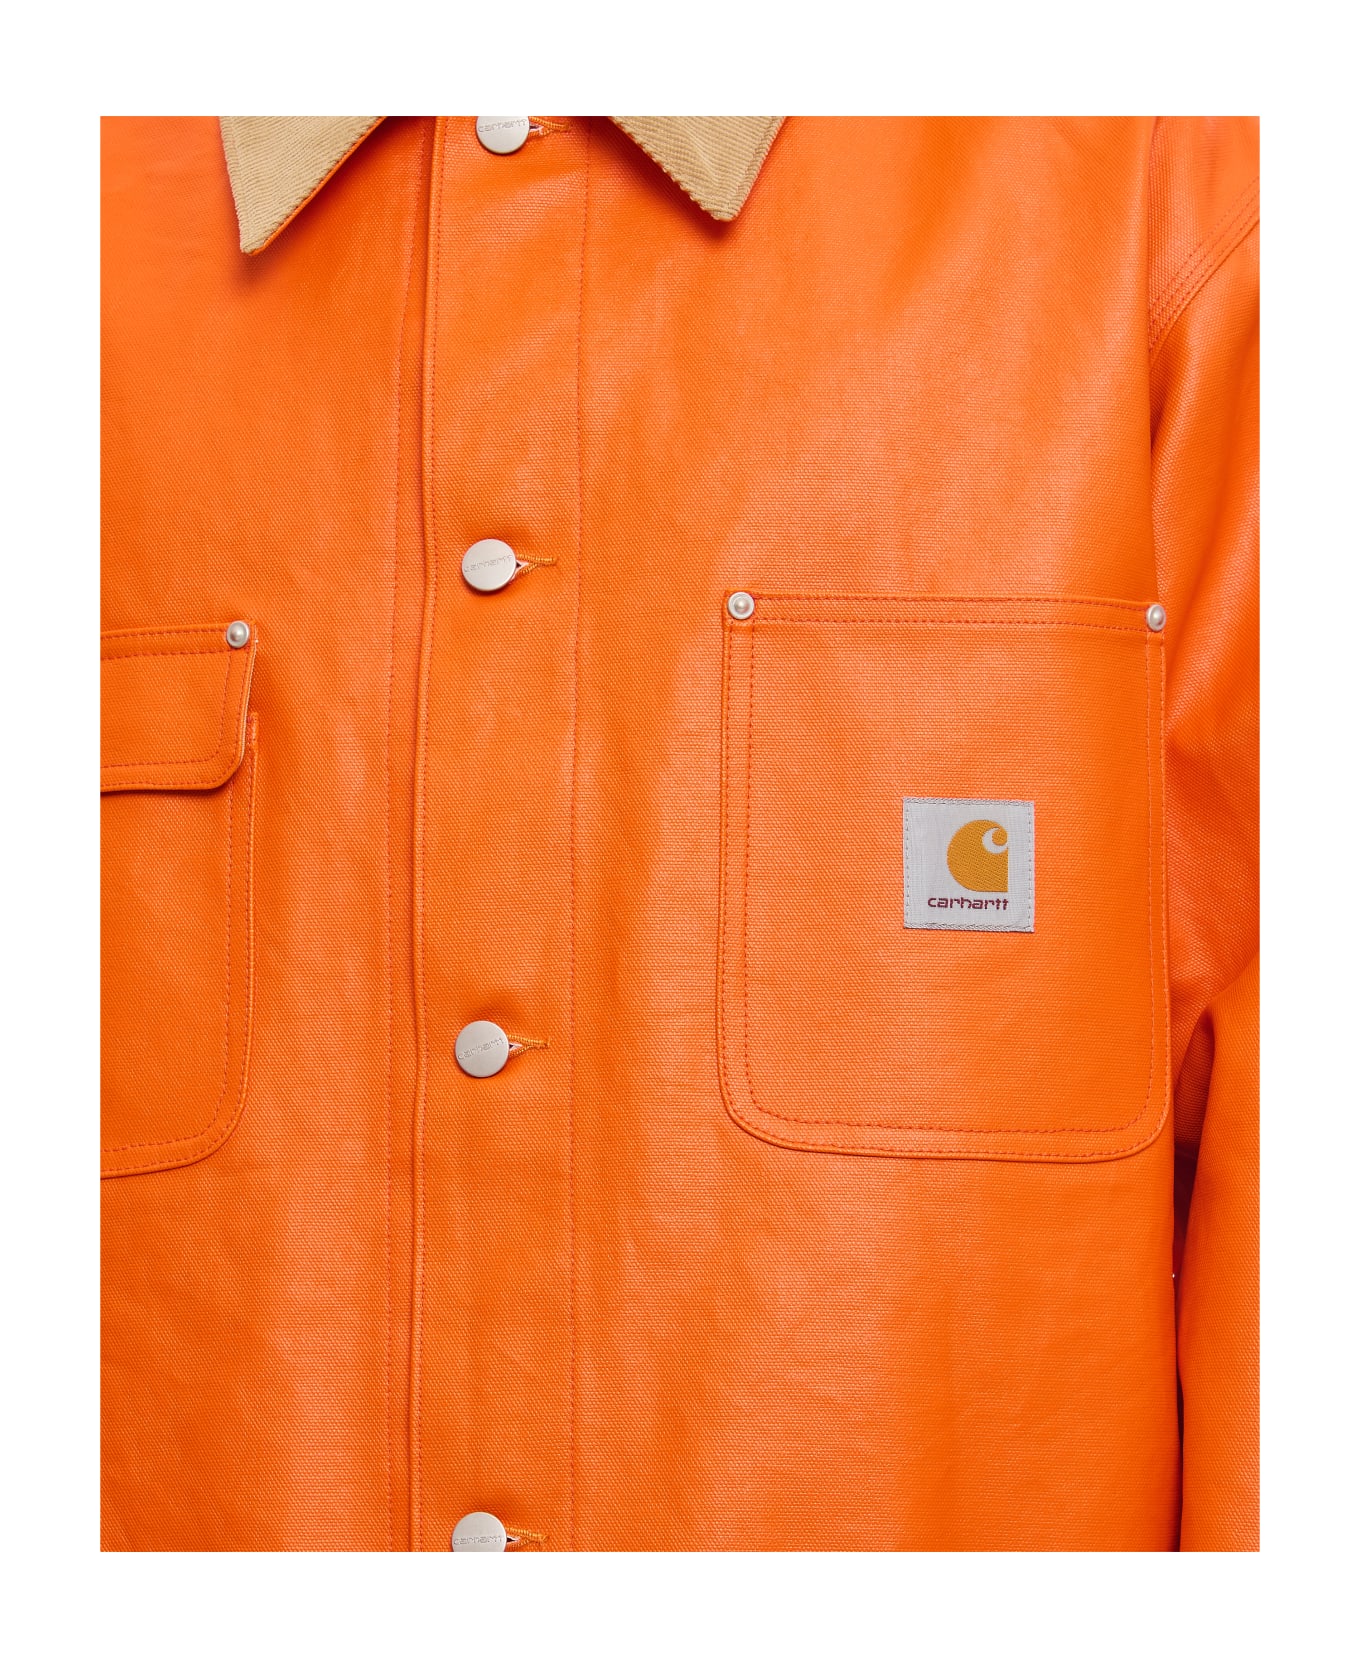 Junya Watanabe Man X Carhartt Jacket - Orange ジャケット